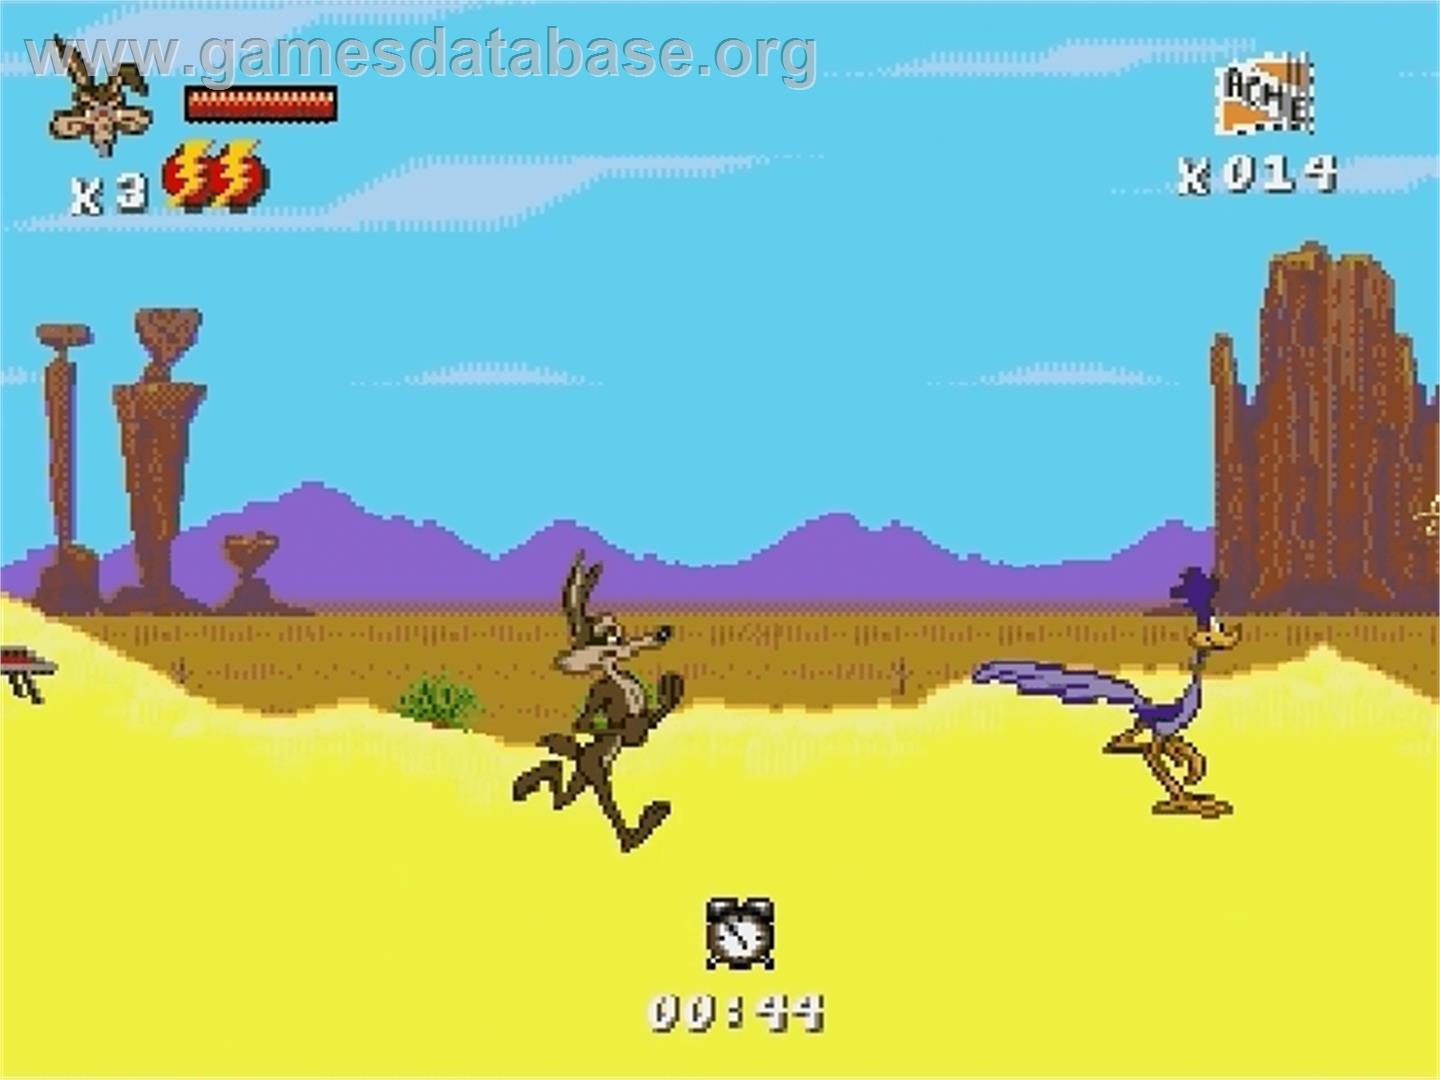 Desert Demolition Starring Road Runner and  Wile E. Coyote - Sega Genesis - Artwork - In Game